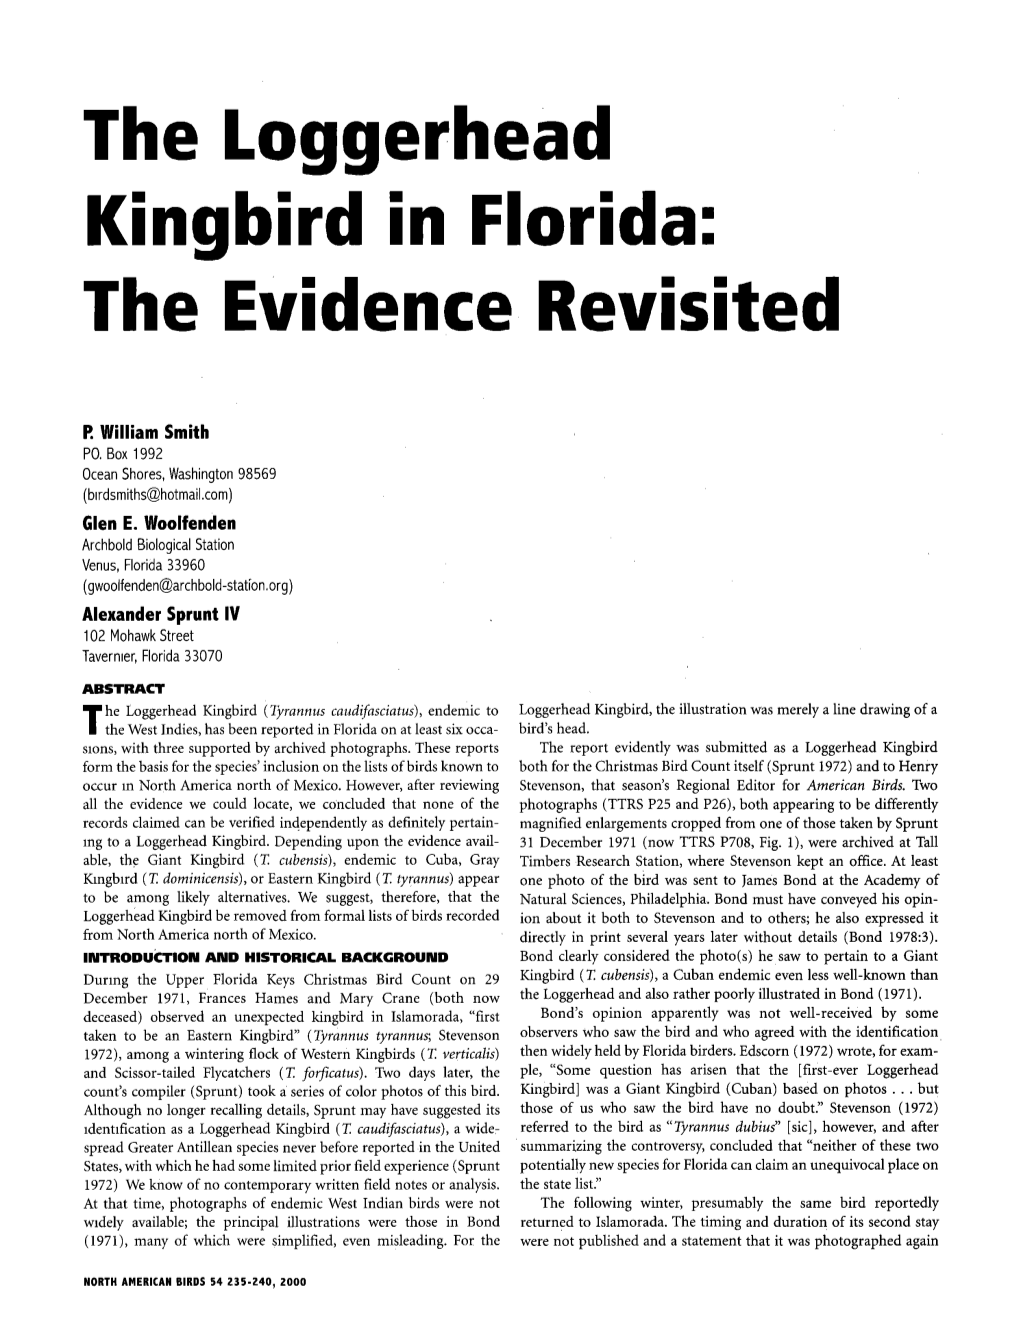 The Loggerhead Kingbird in Florida: the Evidence Revisited